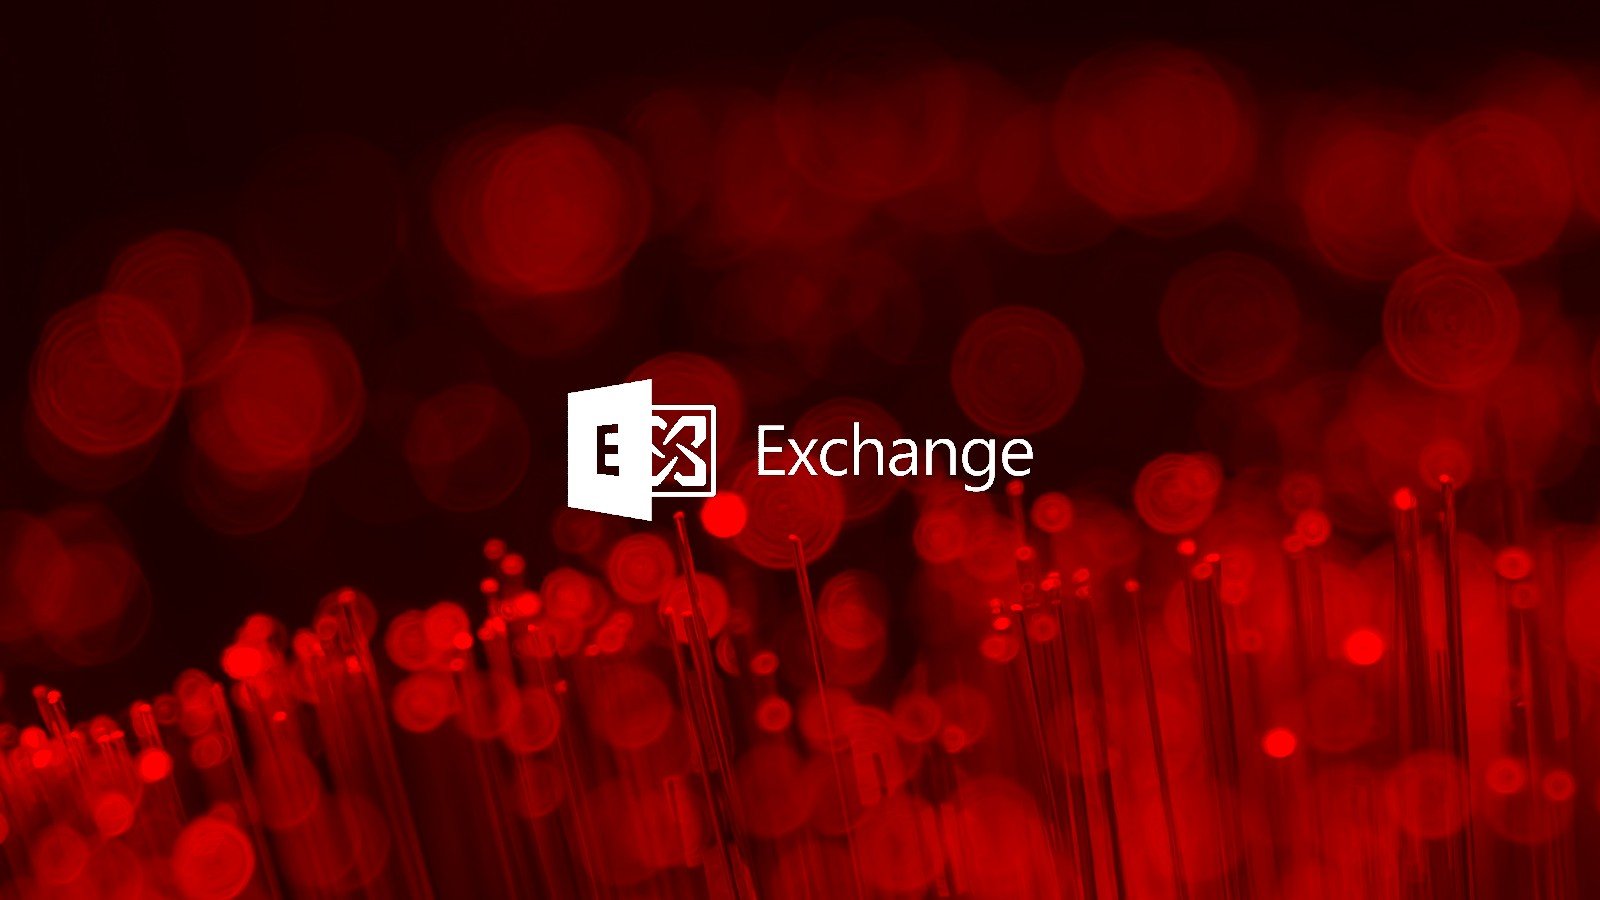 New Microsoft Exchange zero-day actively exploited in attacks